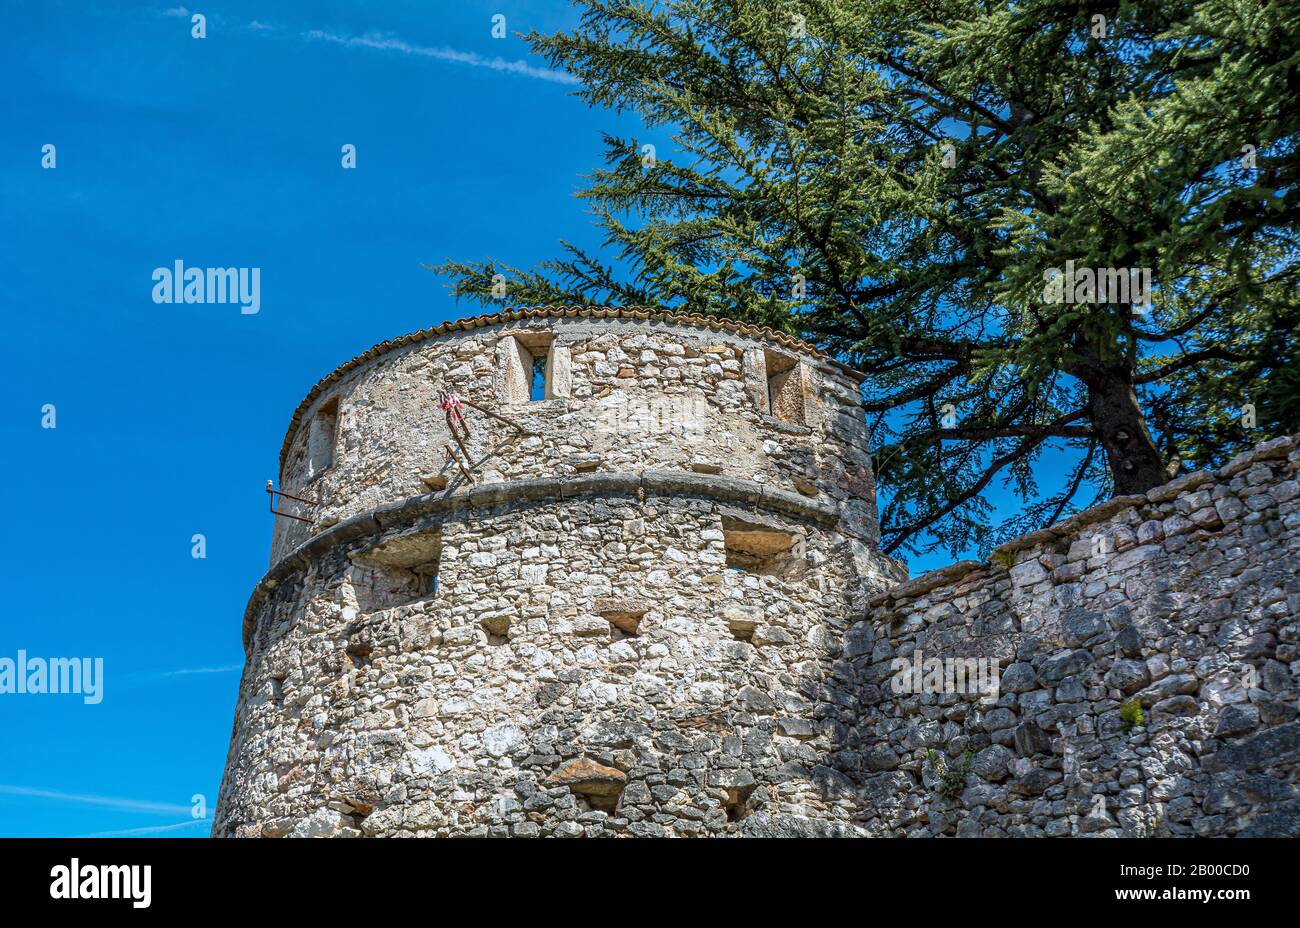 Castillo De Thun, Italia, Trentino Alto Adige, Norte De Italia, Europa. Castillo medieval en Italia con jardín y murallas defensivas. Foto de stock